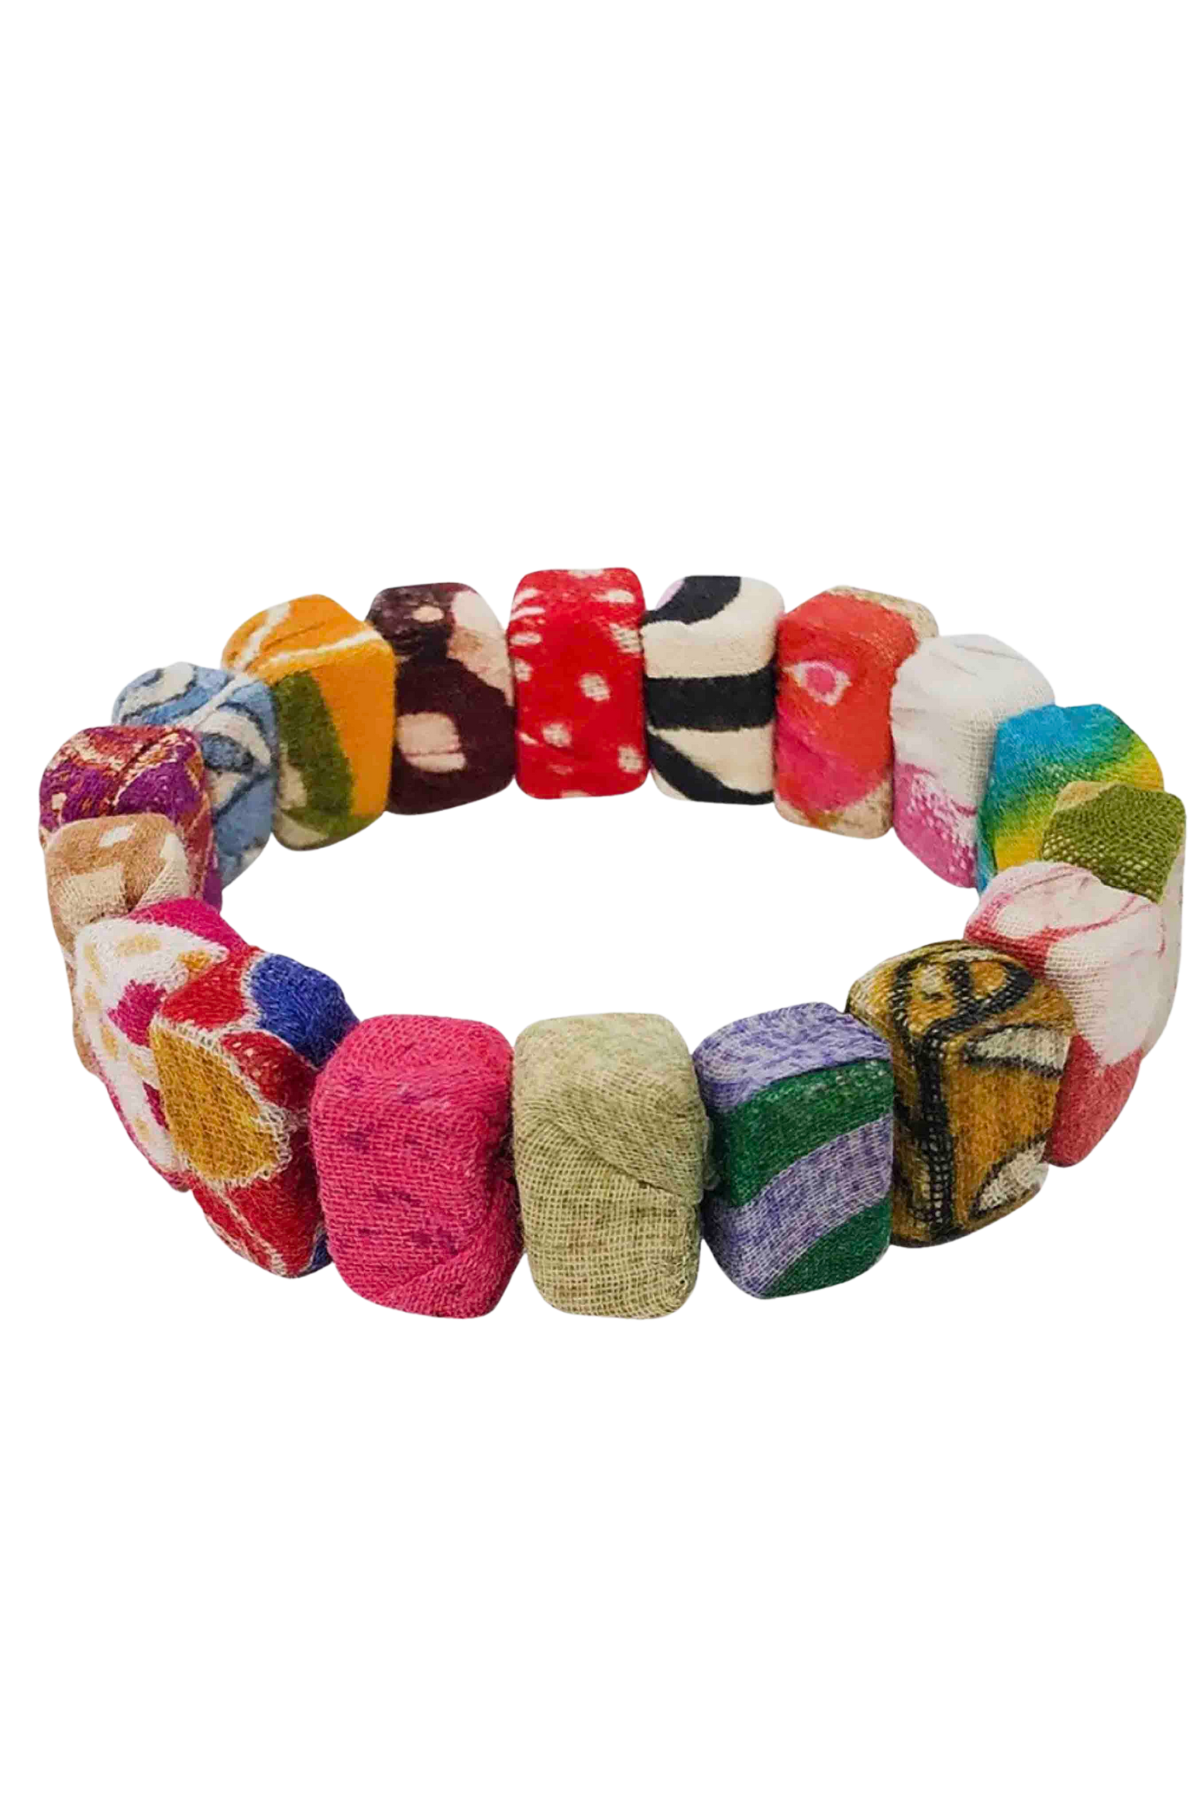 Multicolored Kantha Block Bracelet by World Finds